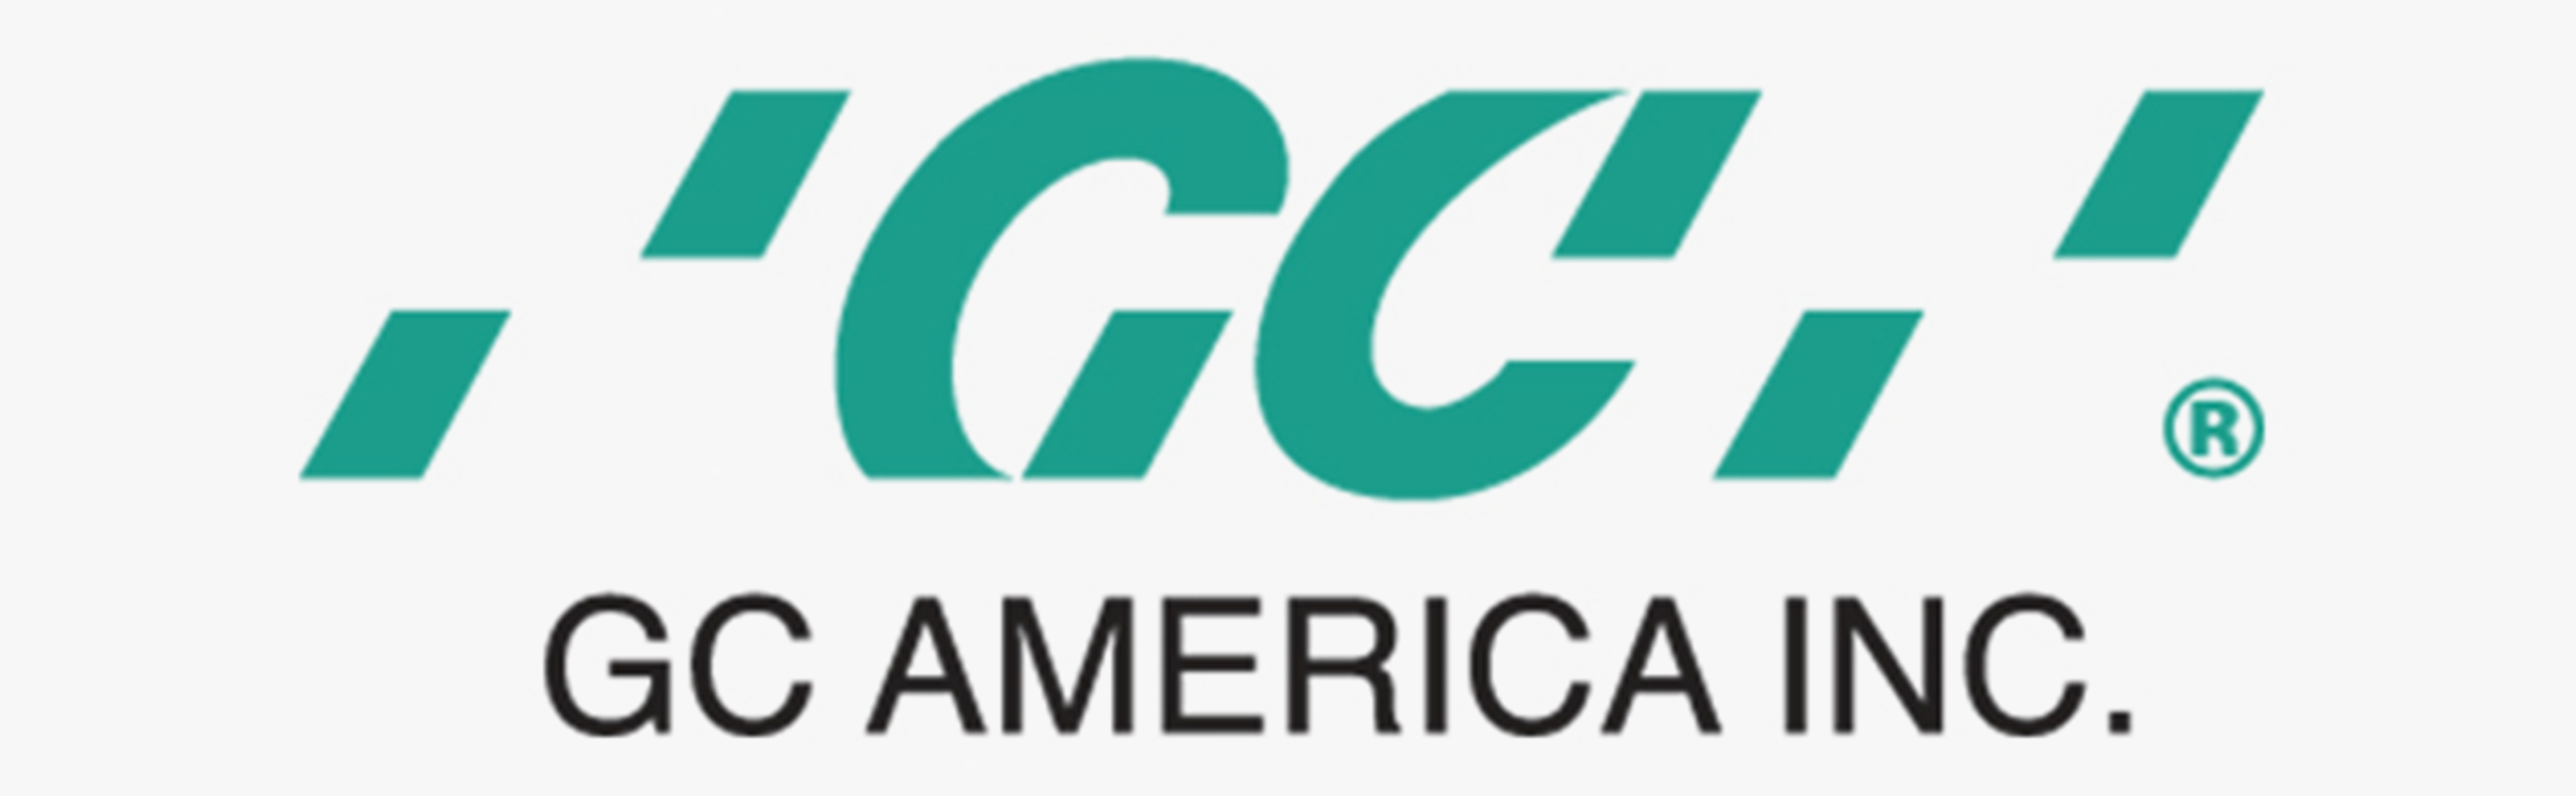 GC America, Inc.